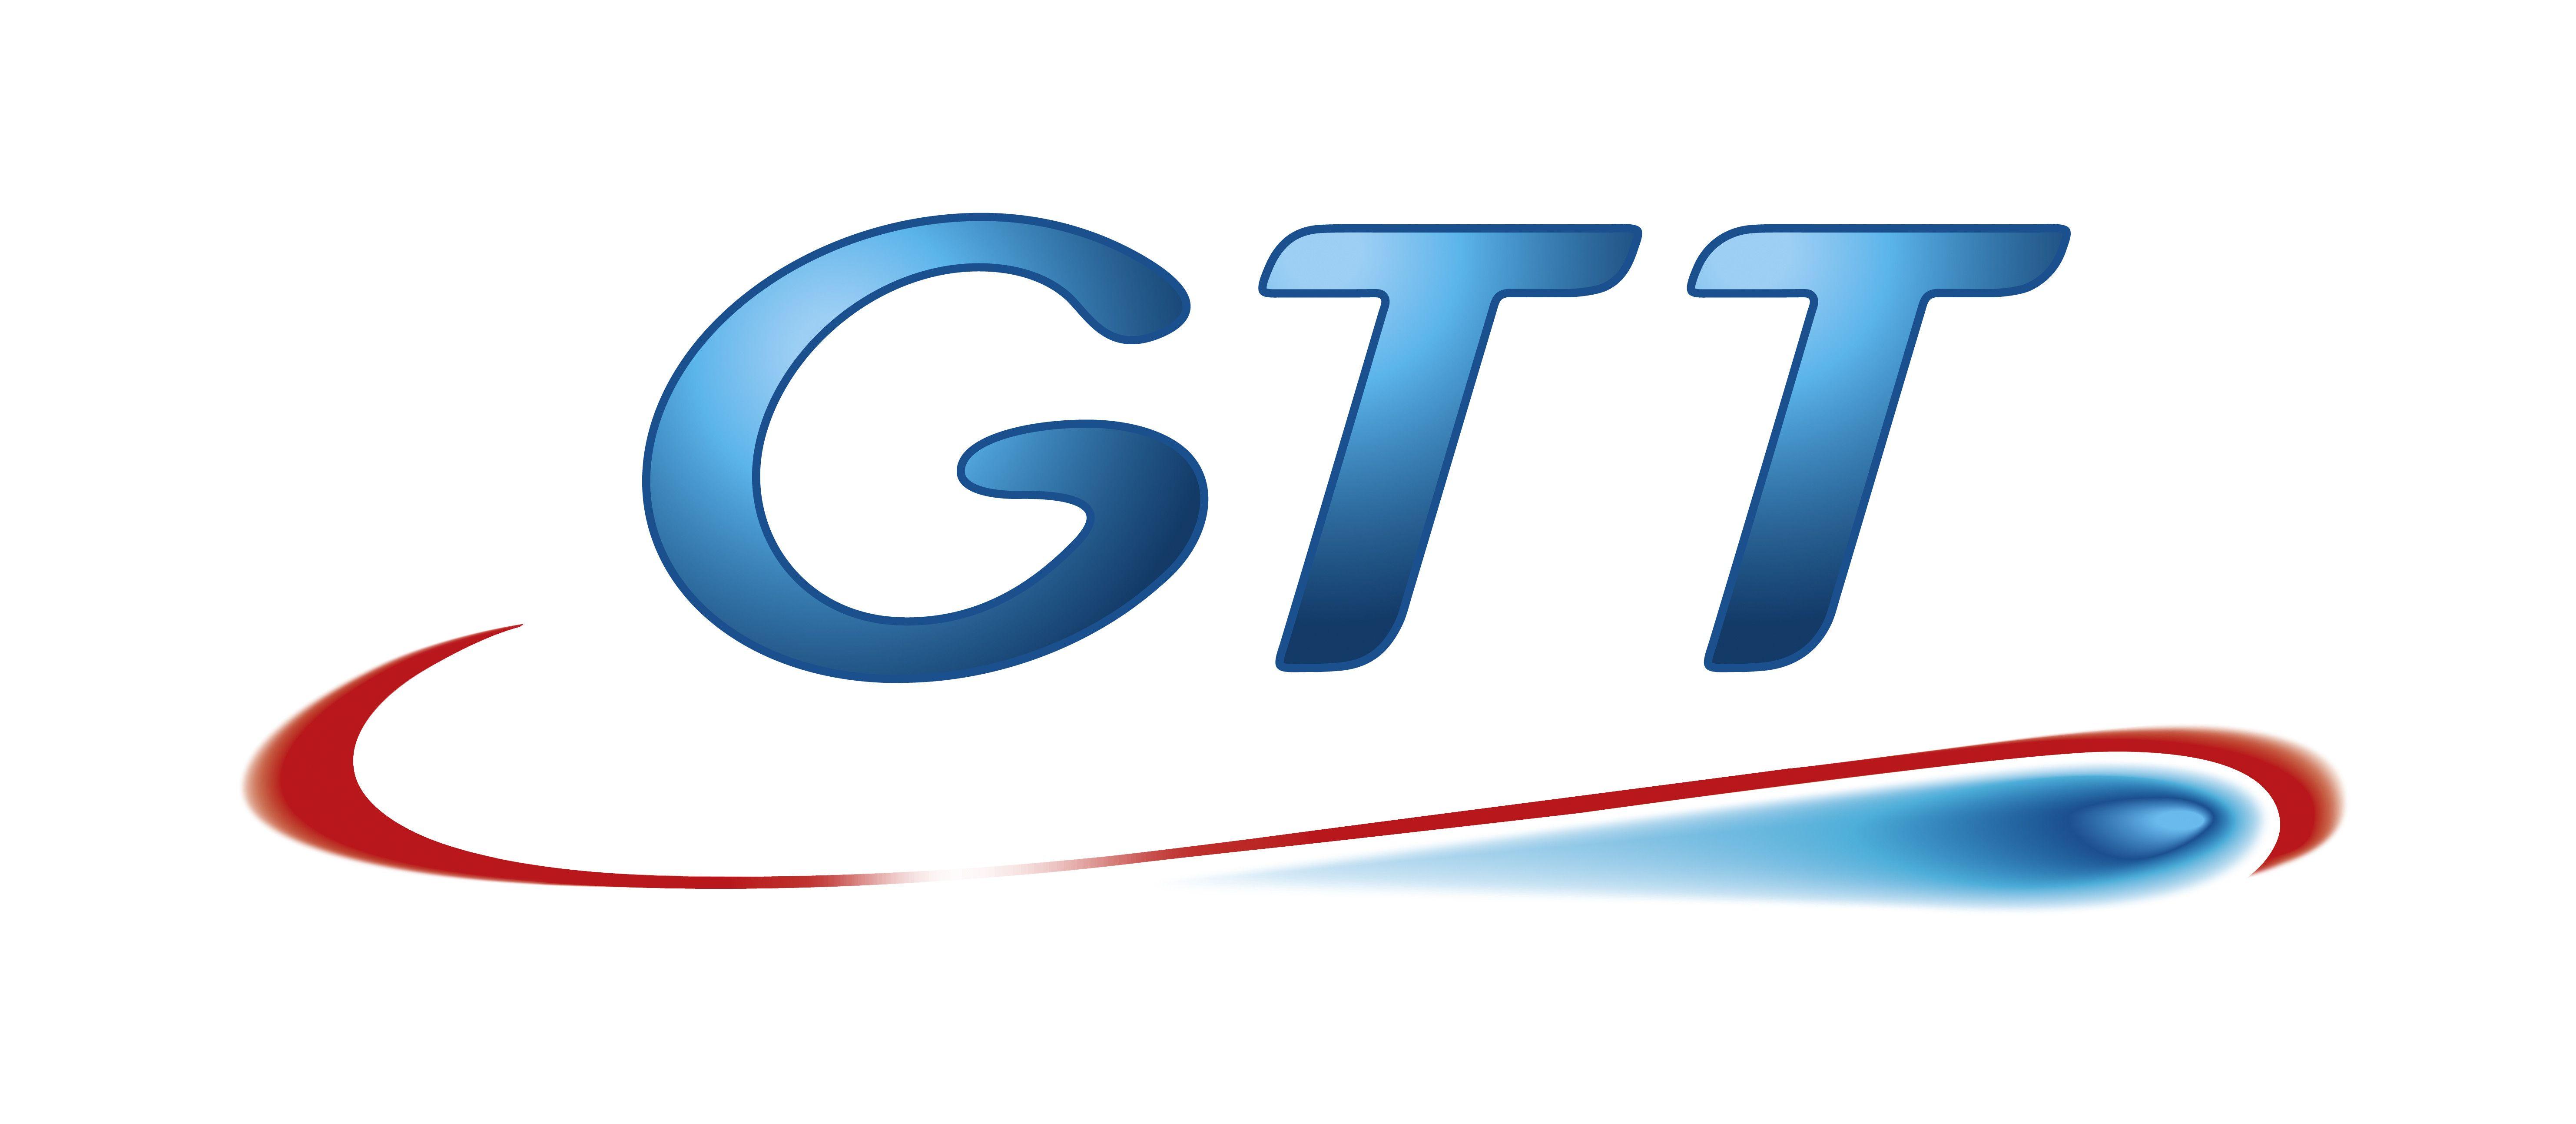 Gtt Logo - WLPGA Member Focus - GTT - WLPGA